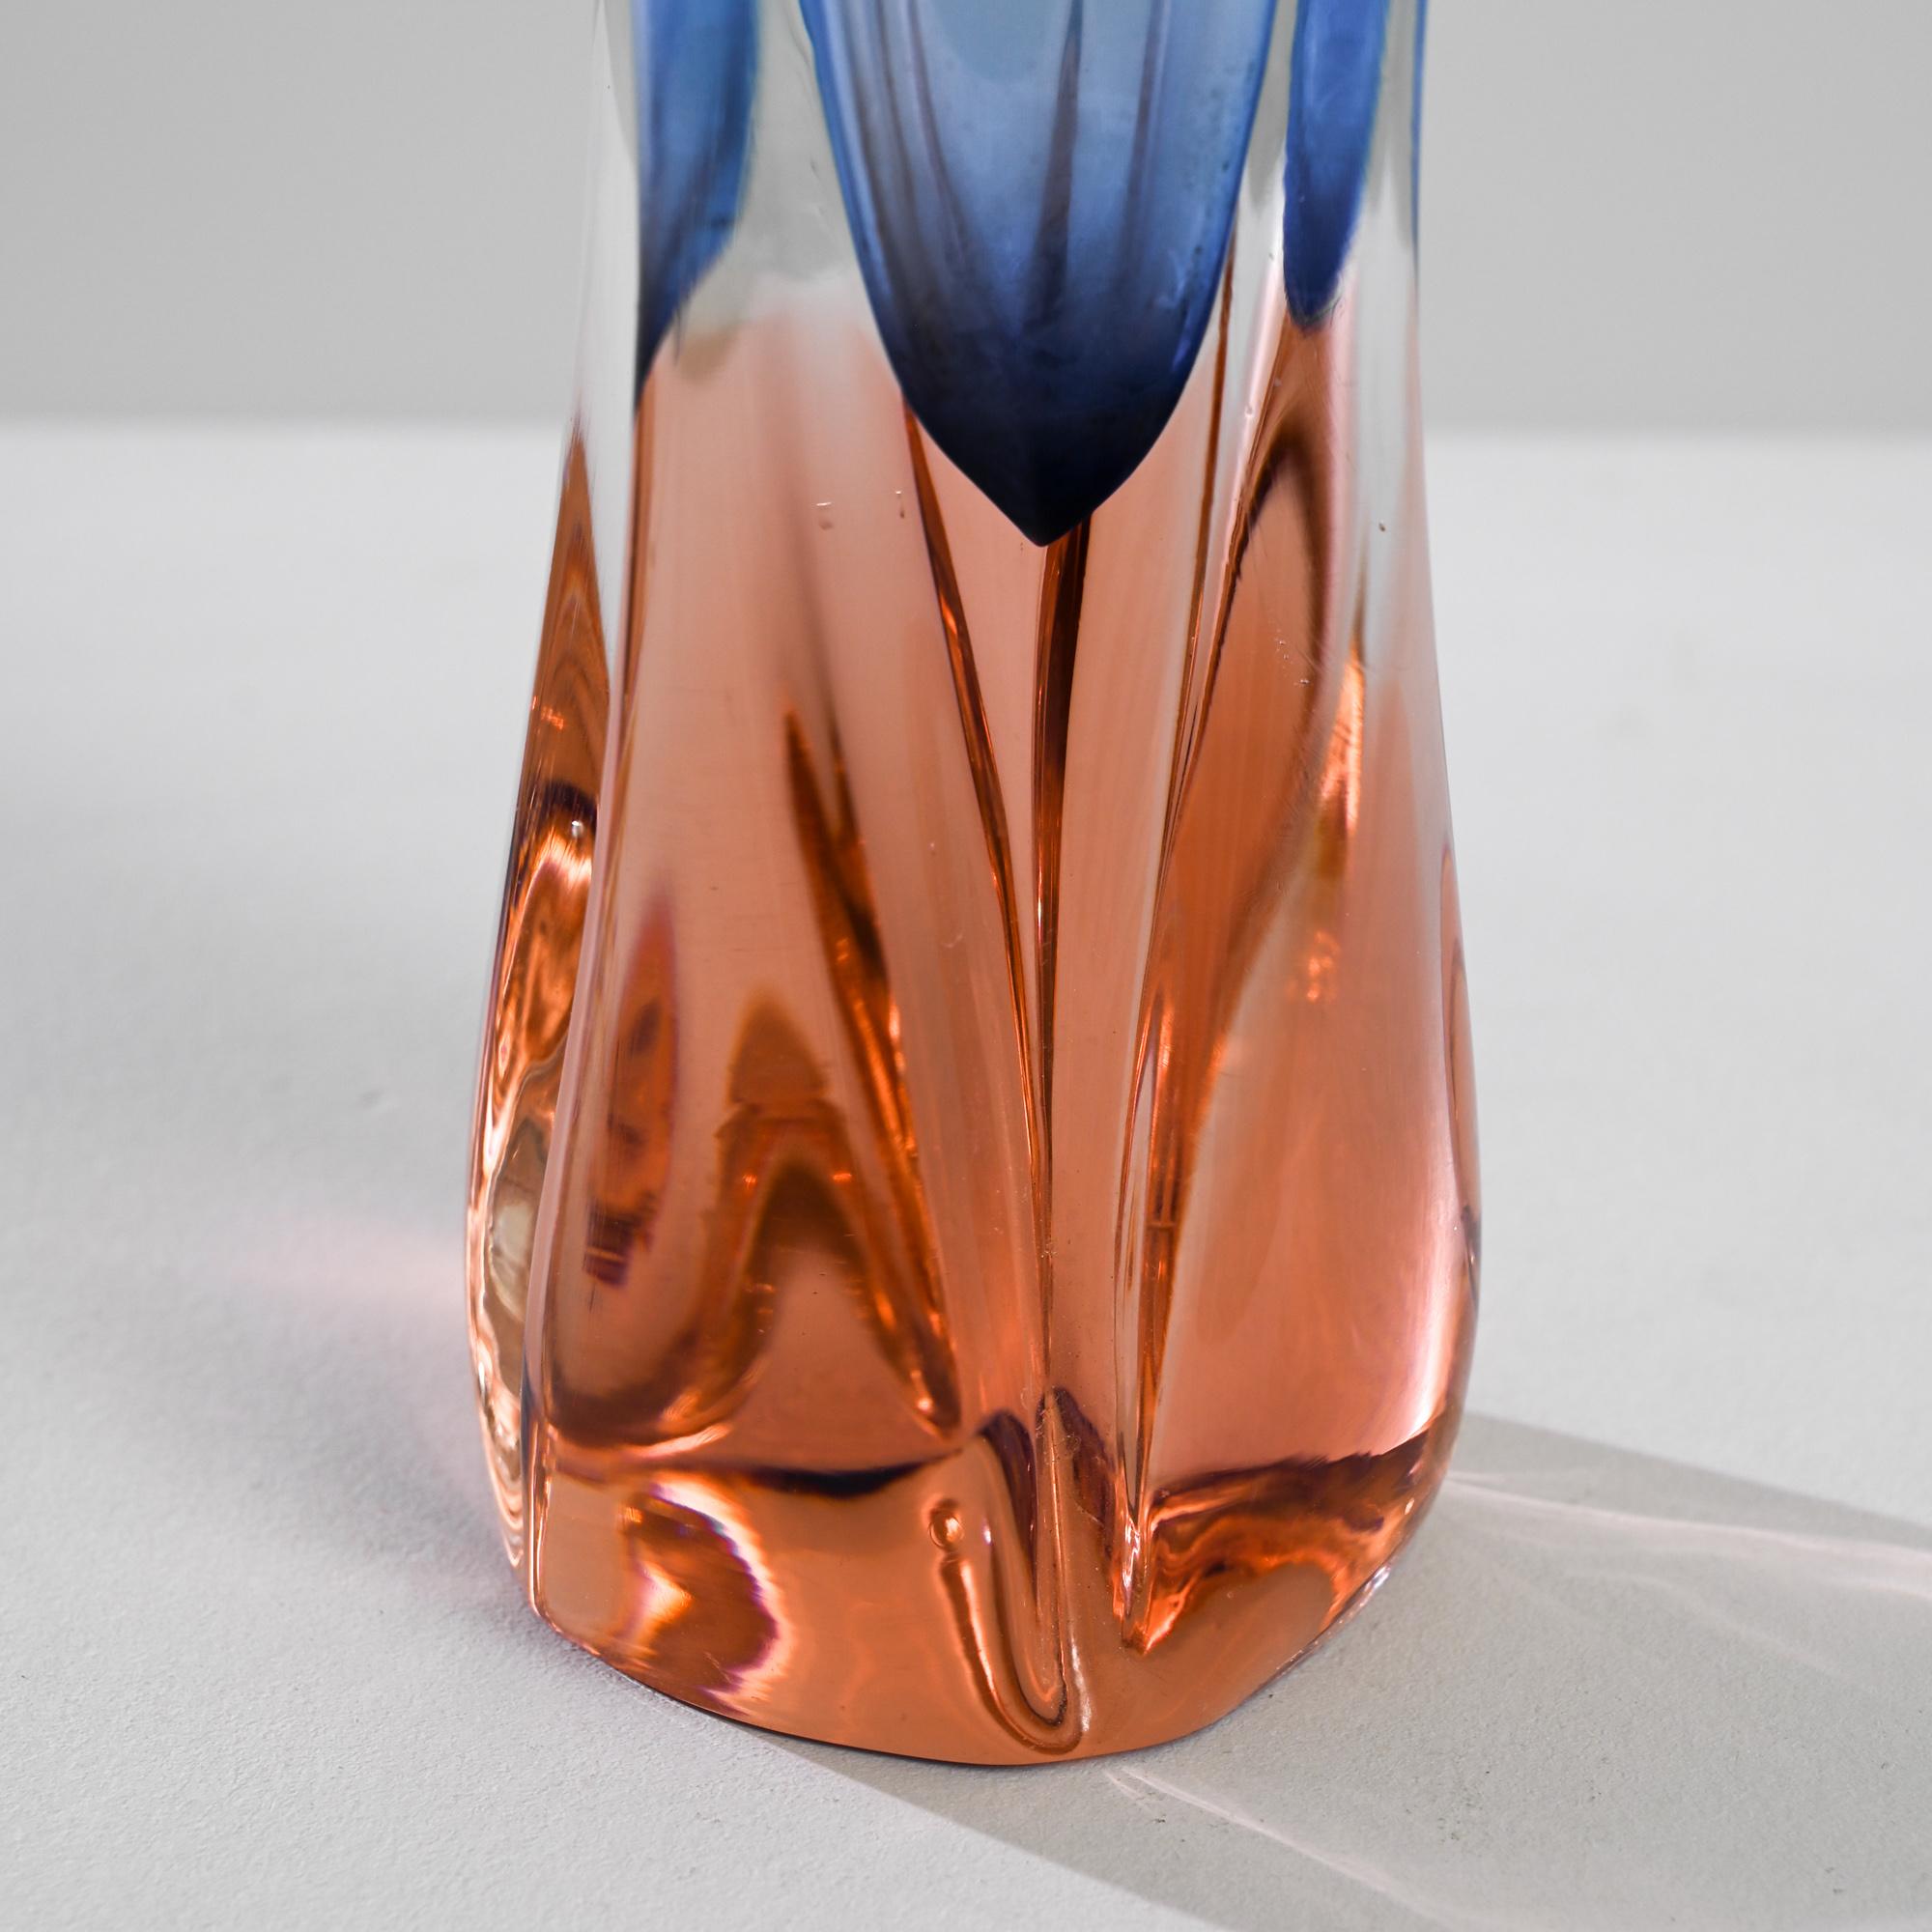 20th Century Belgian Blue and Orange Glass Vase For Sale 2